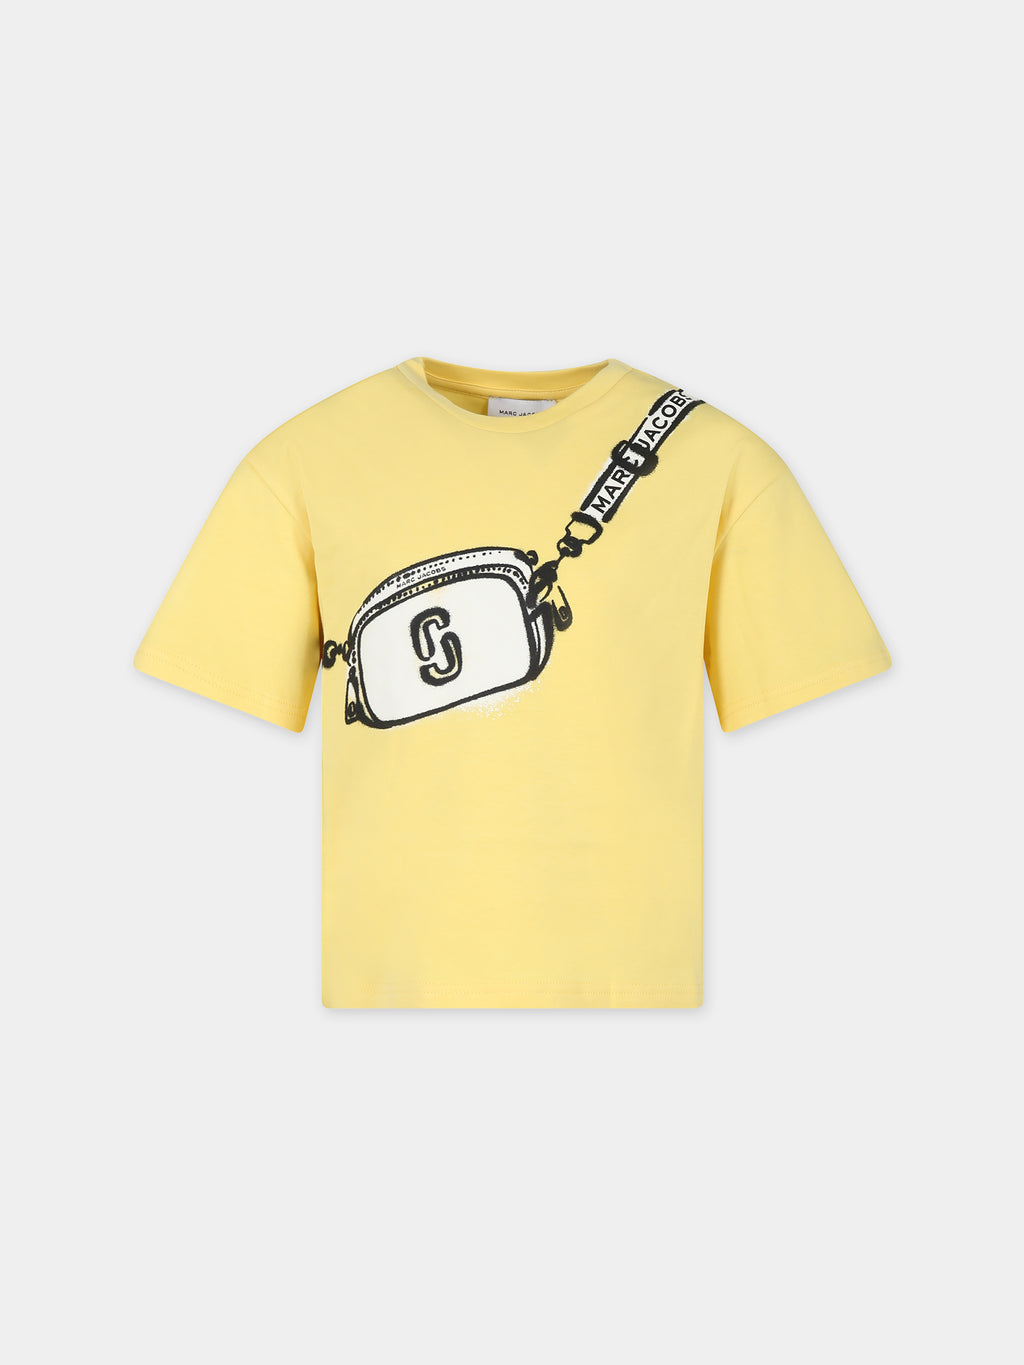 Yellow t-shirt for girl with bag print and logo